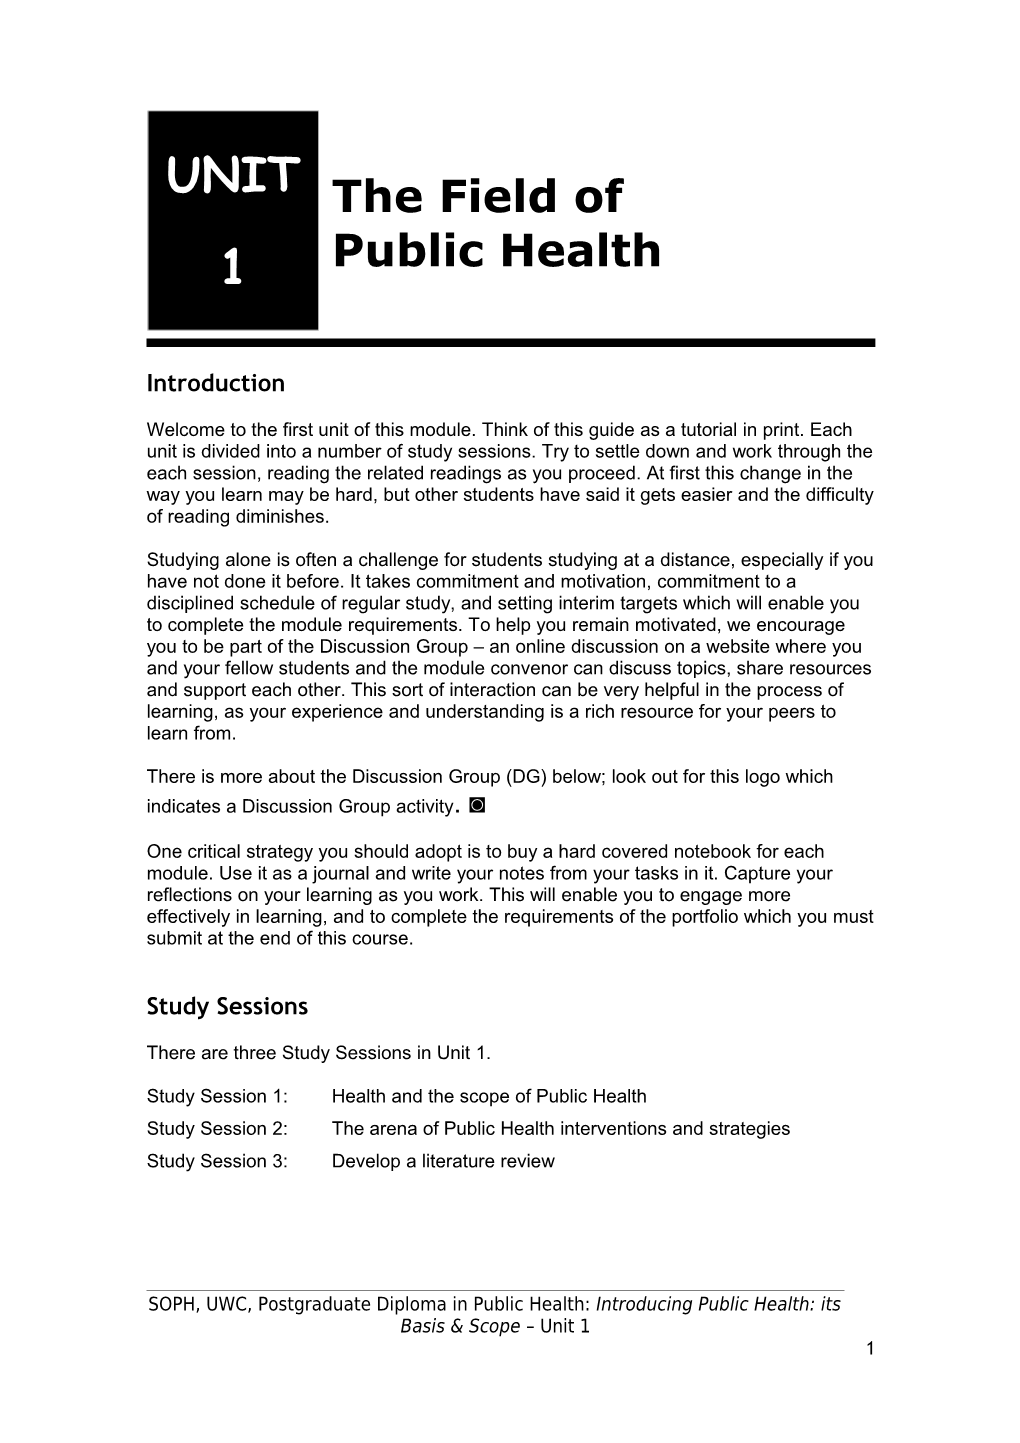 The Field of Public Health